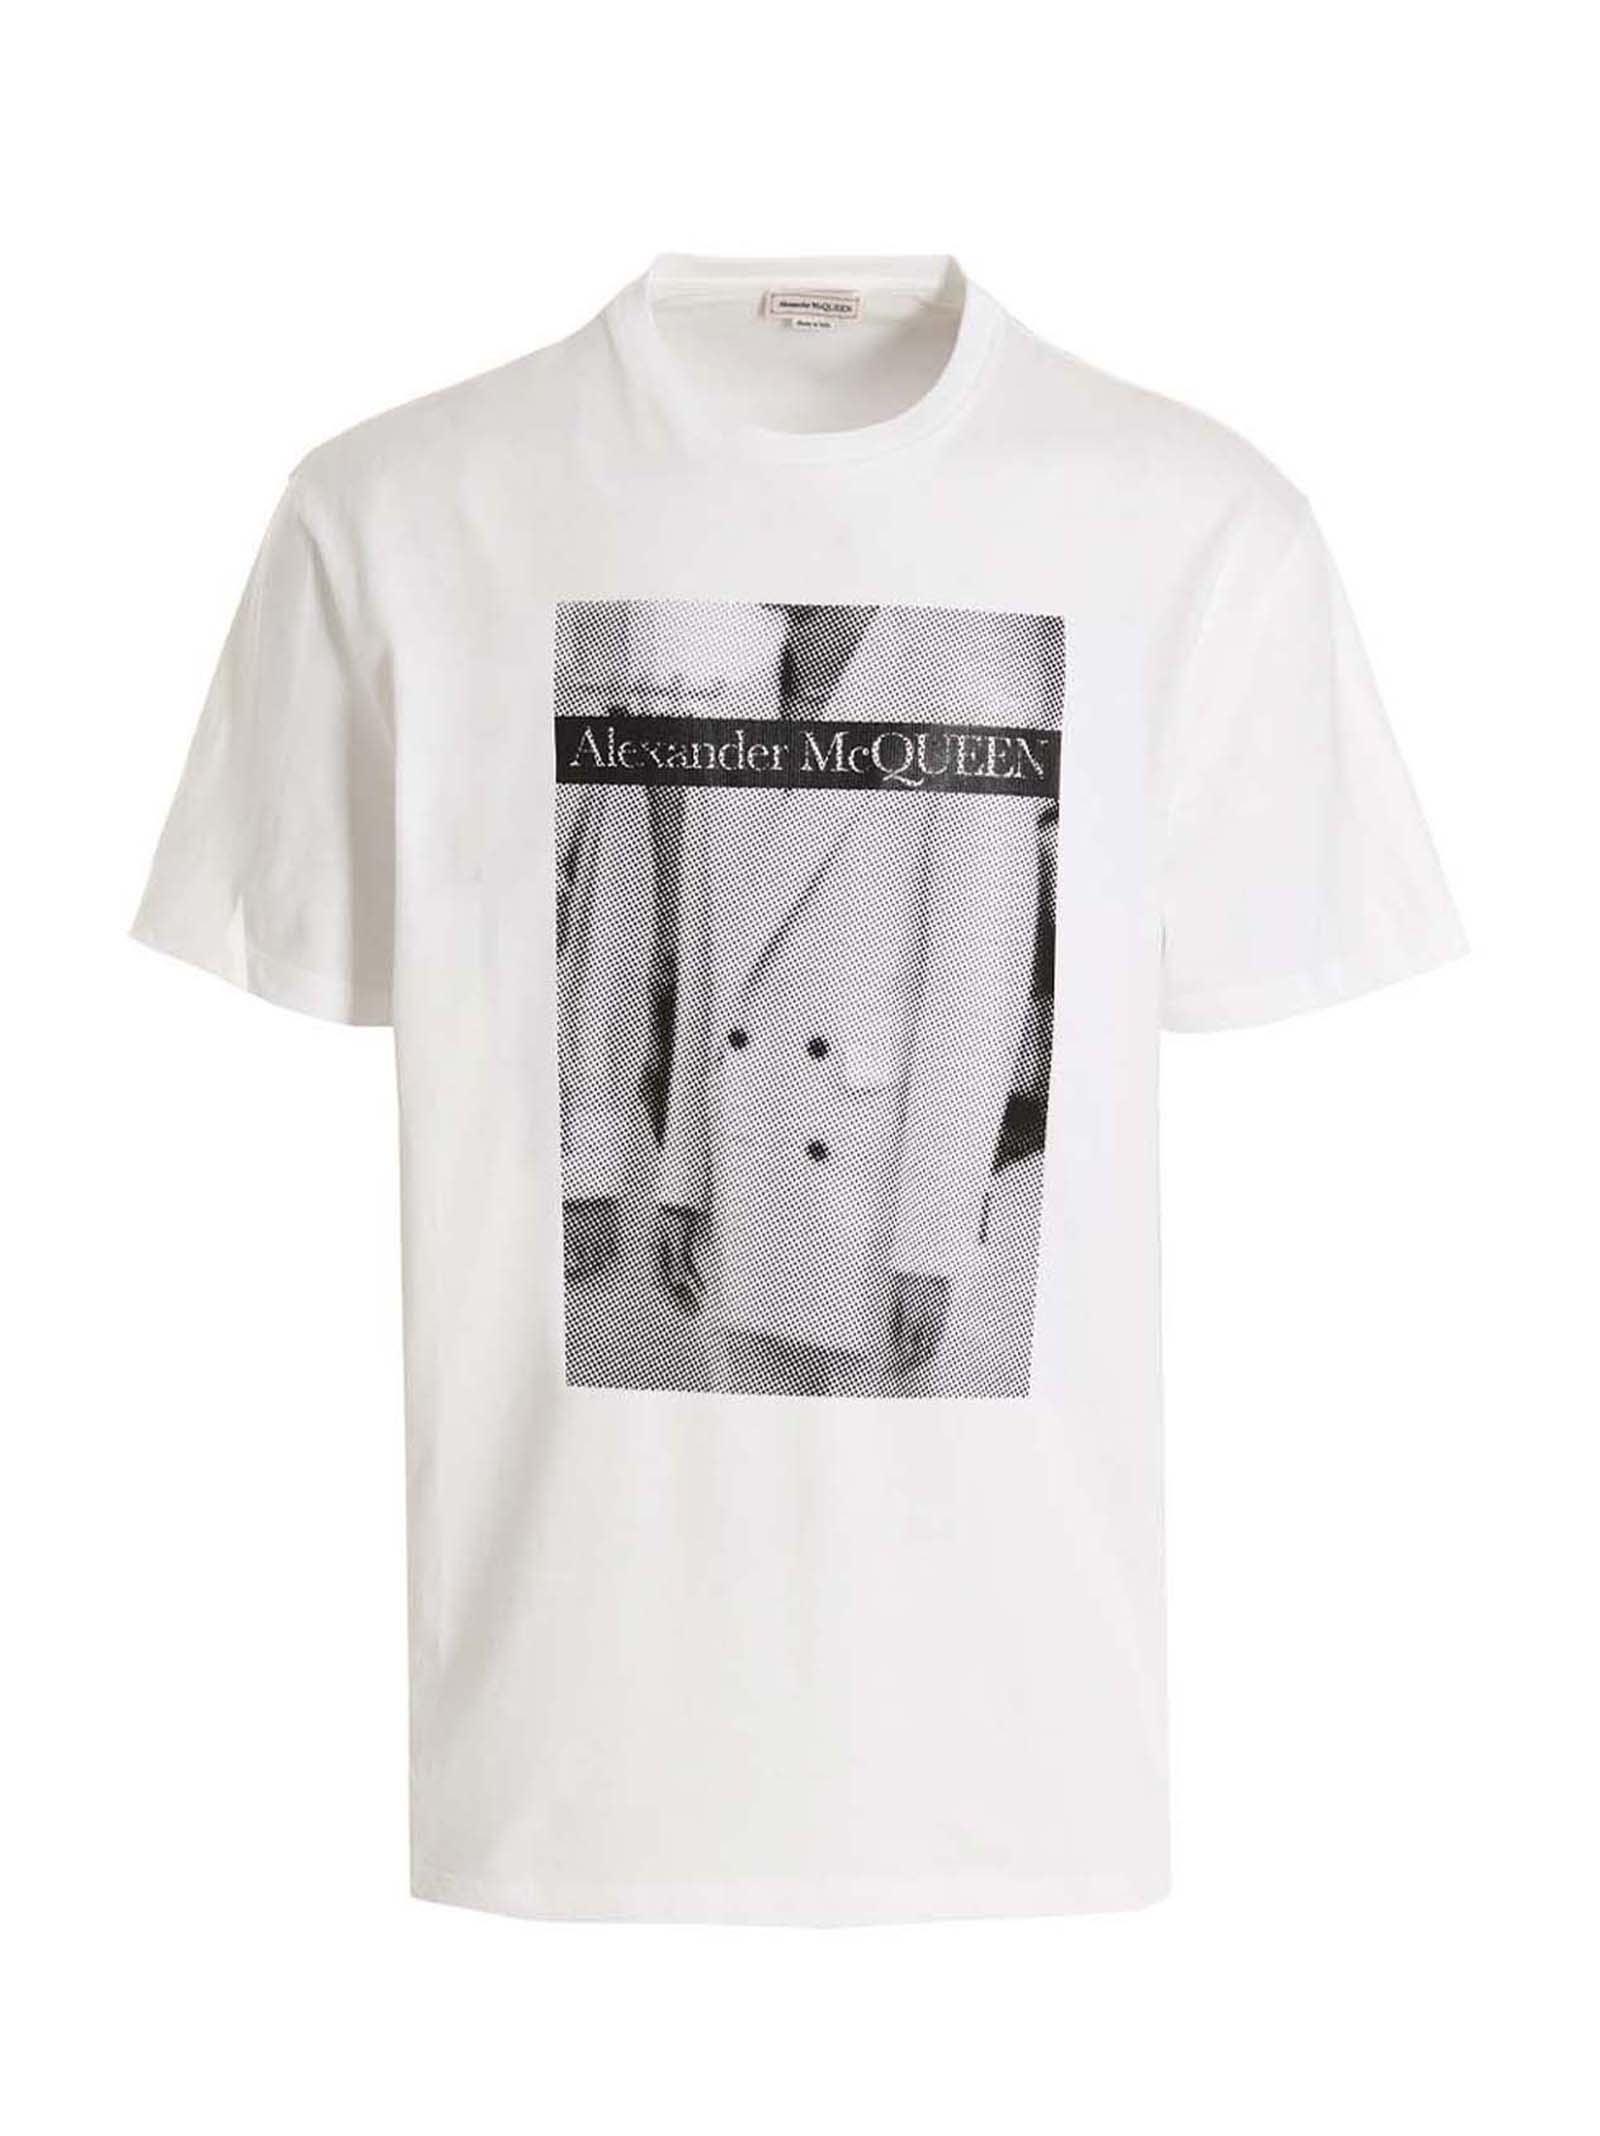 Alexander Mcqueen Printed T-shirt In White/black